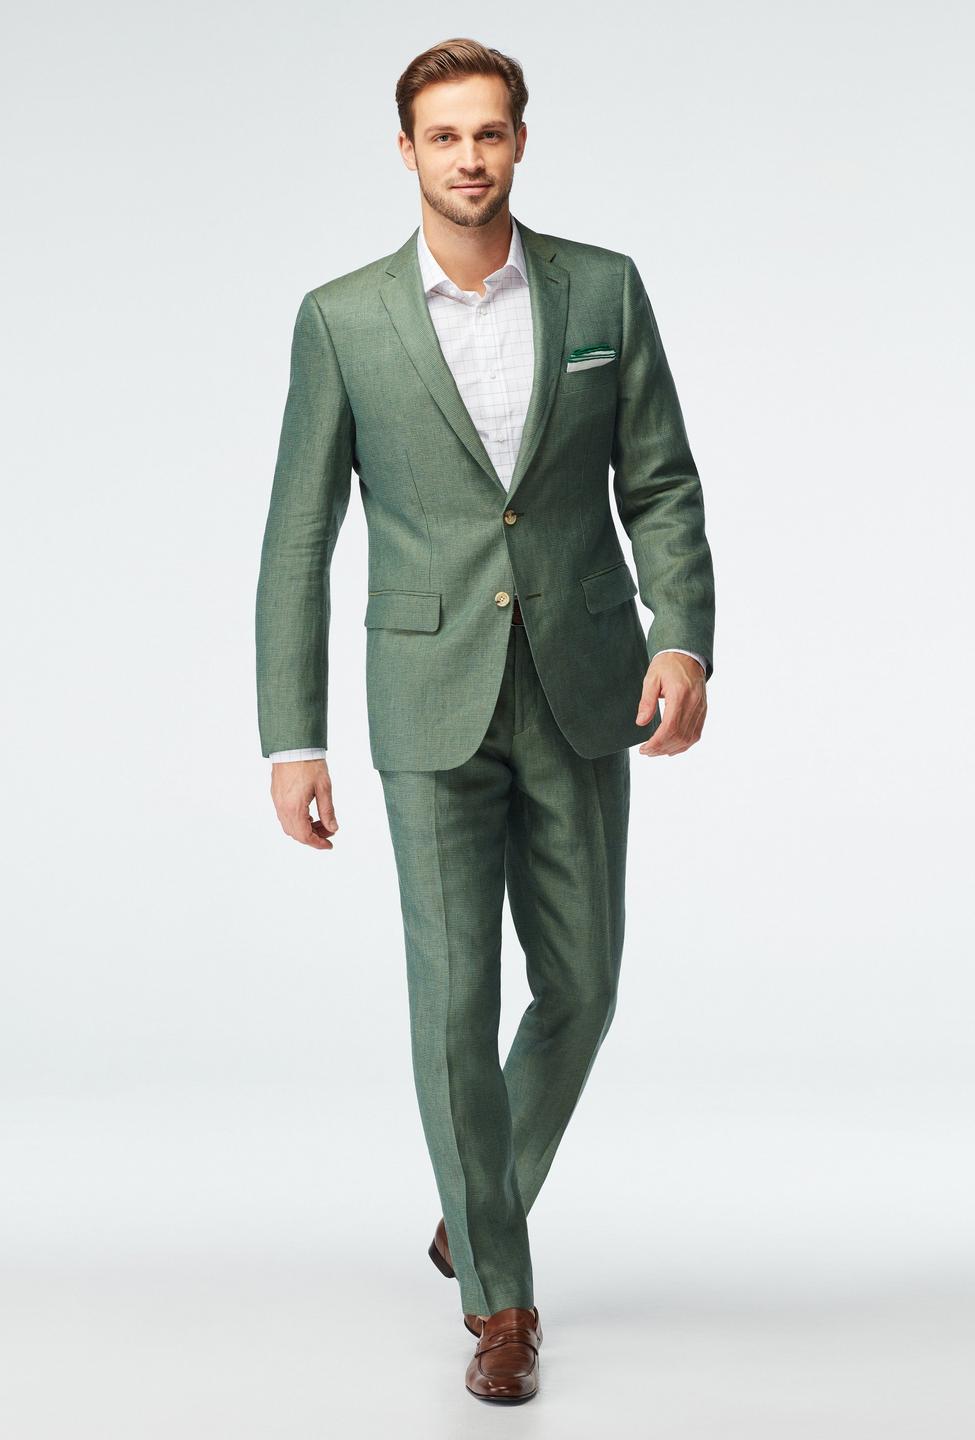 Sailsbury Green Suit